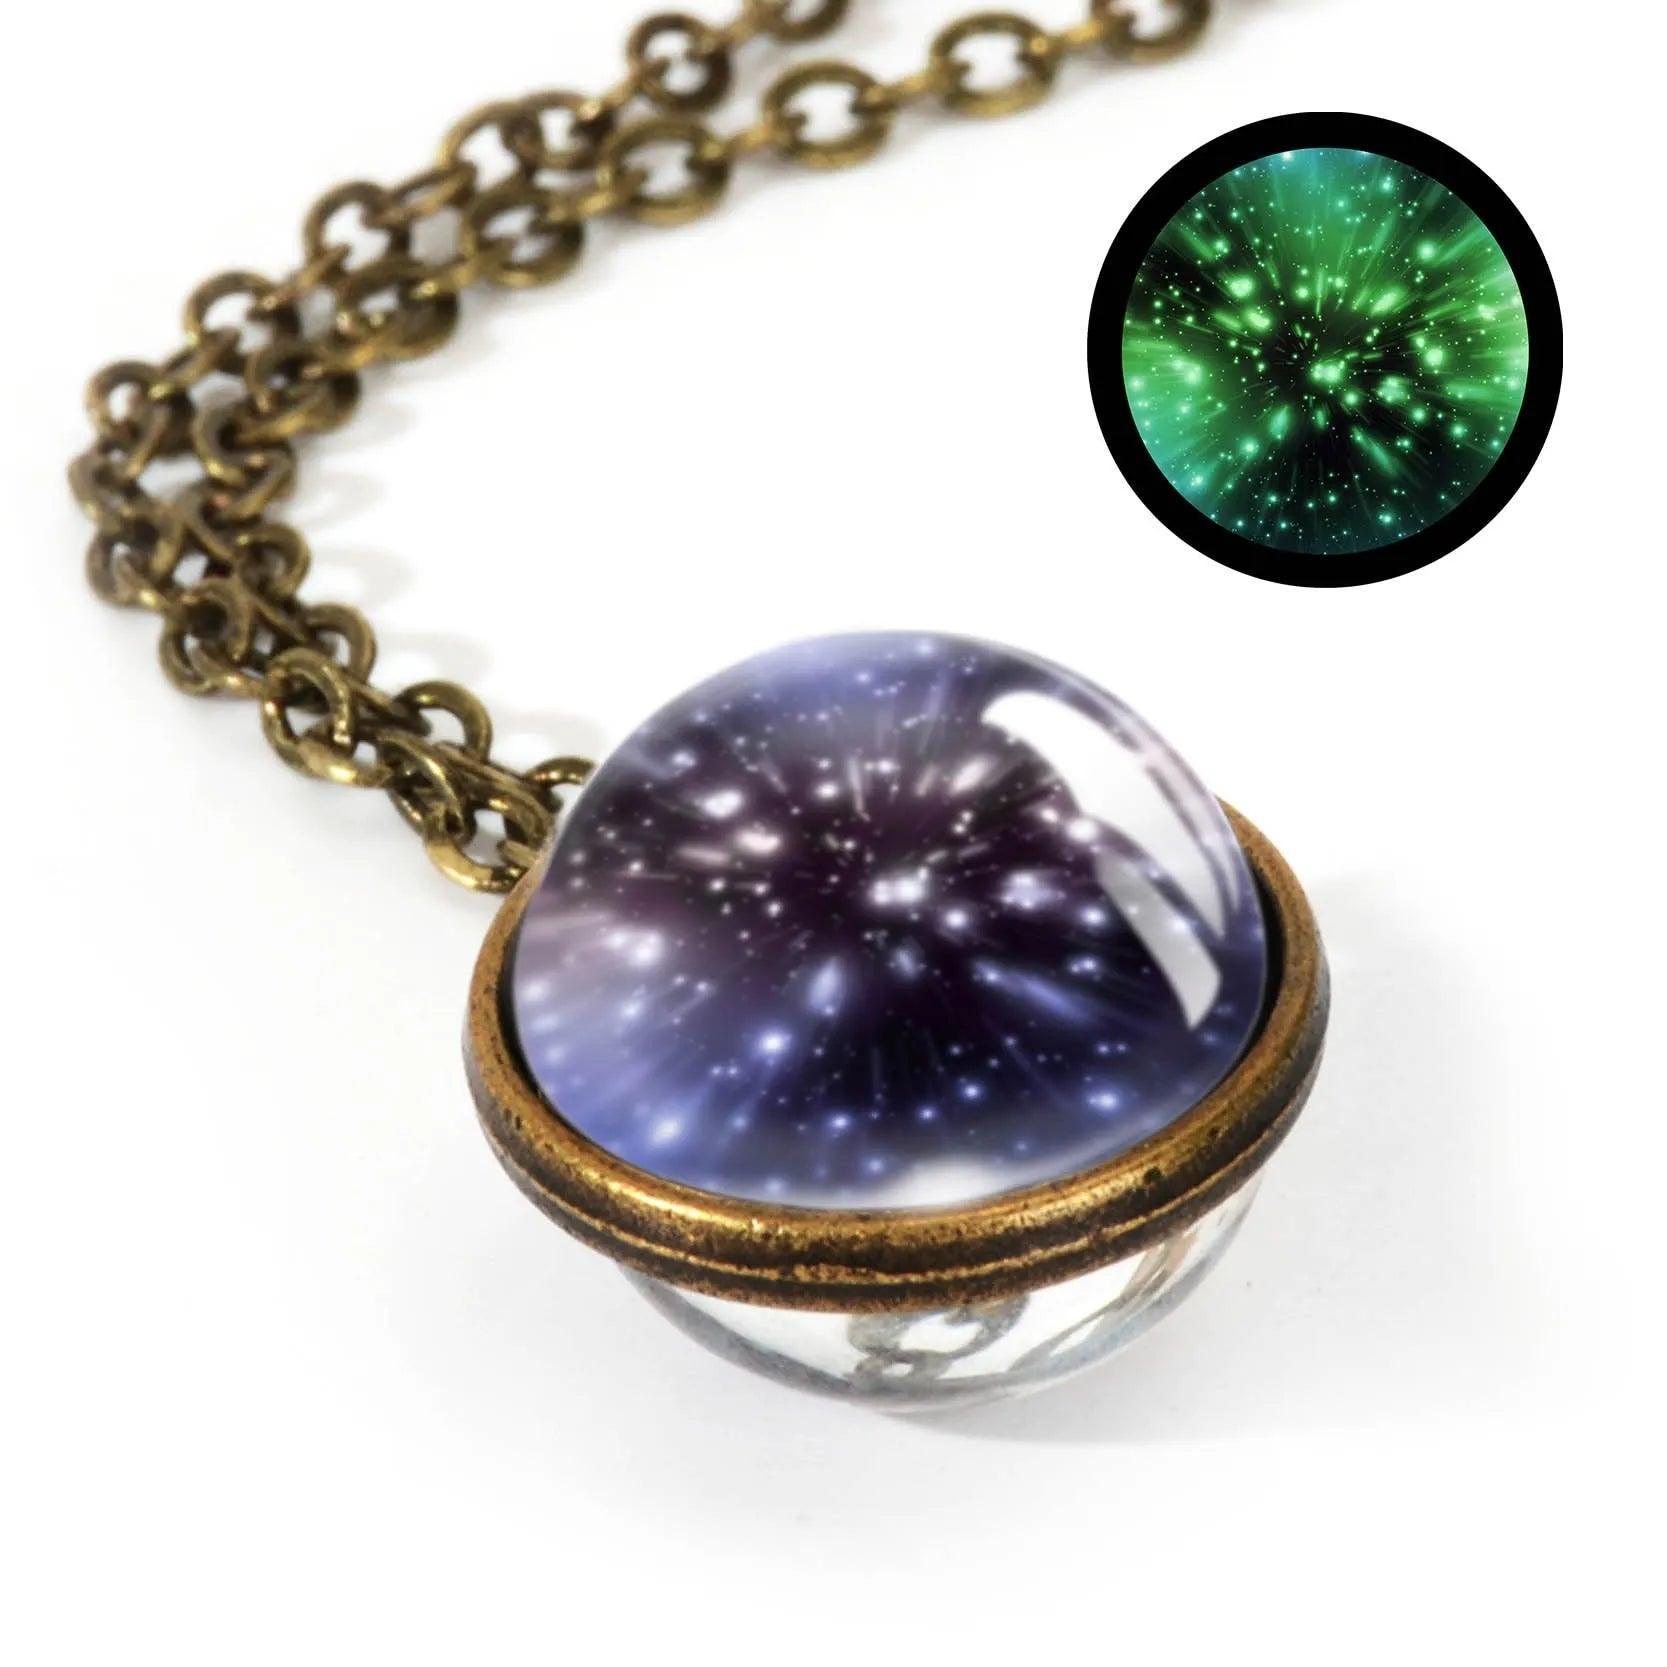 2020 New Nebula Galaxy Double Sided Pendant Necklace Universe Planet Jewelry Glass Art Picture Handmade Statement Necklace - ItemBear.com